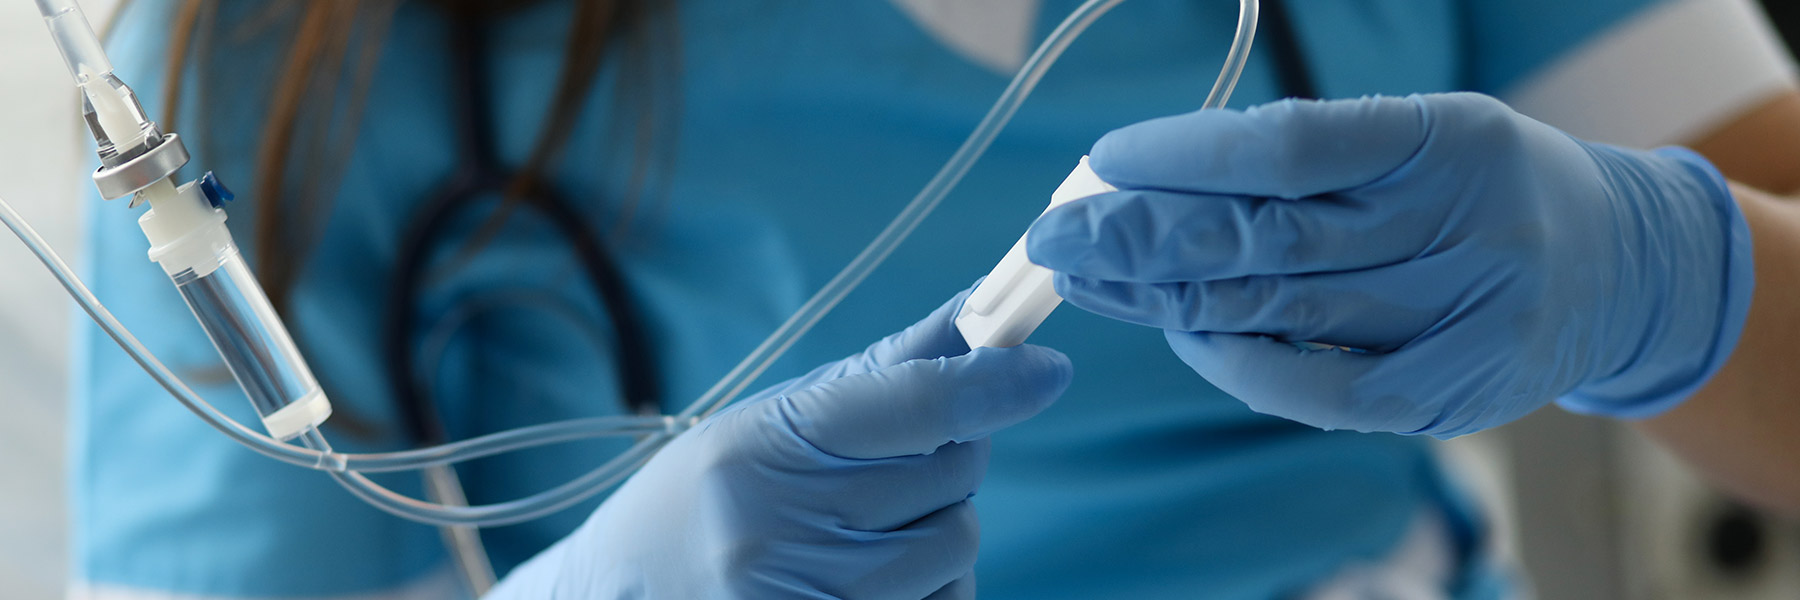 A close-up of a nurse’s gloved hands holding an IV